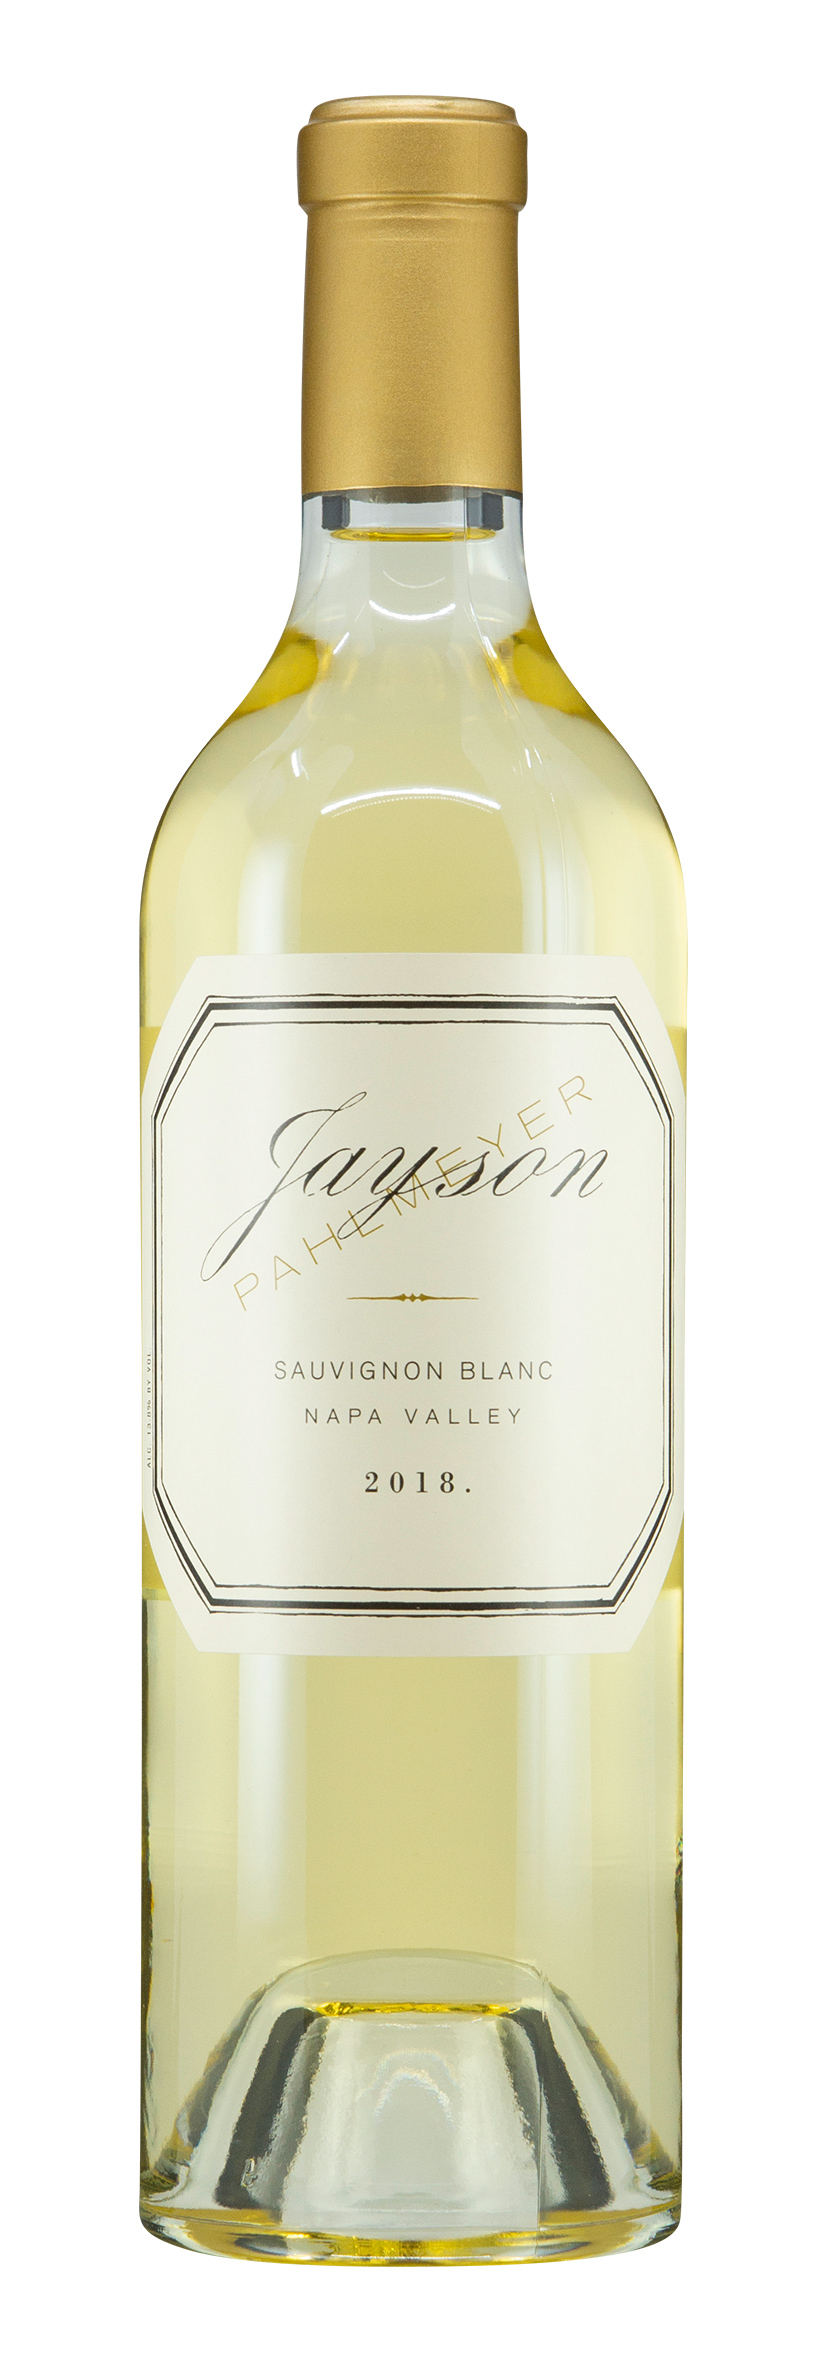 Napa Valley Sauvignon Blanc Jayson 2018